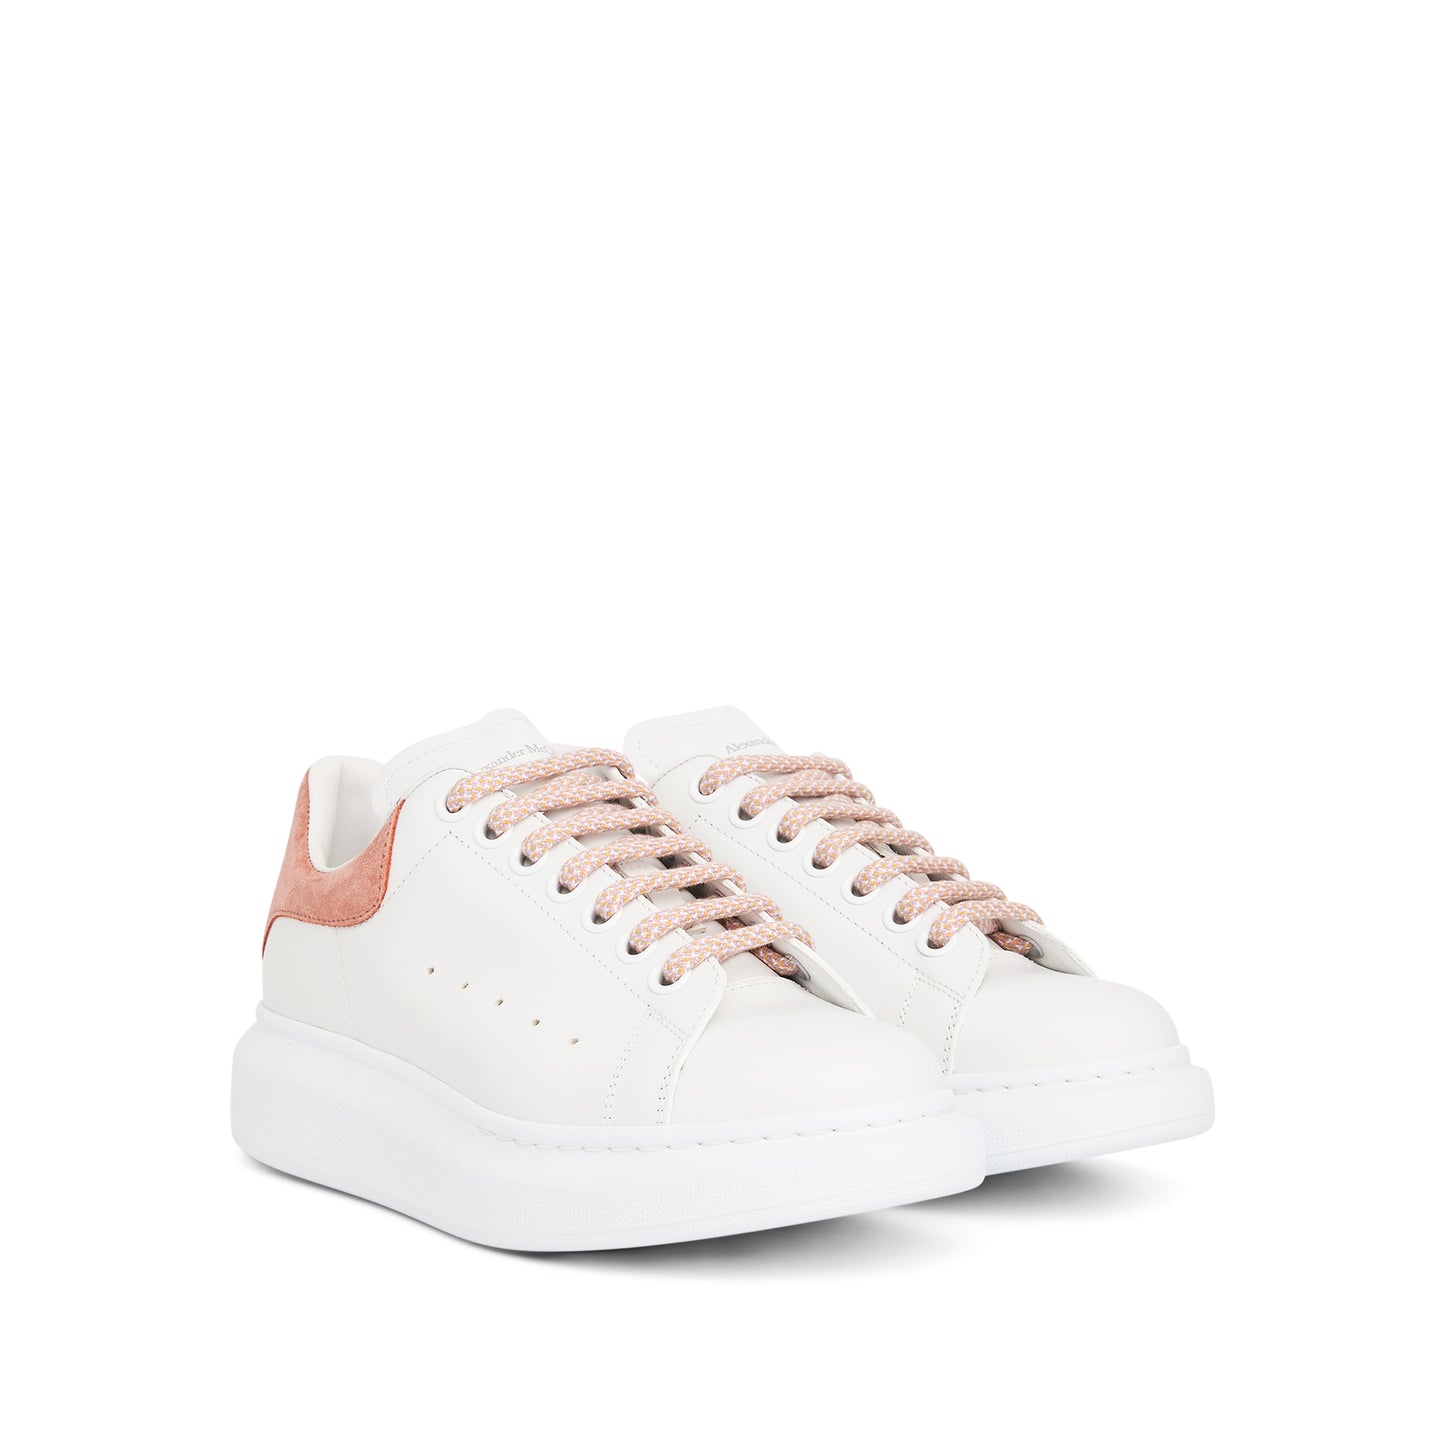 Larry Oversized Sneaker in White/Clay